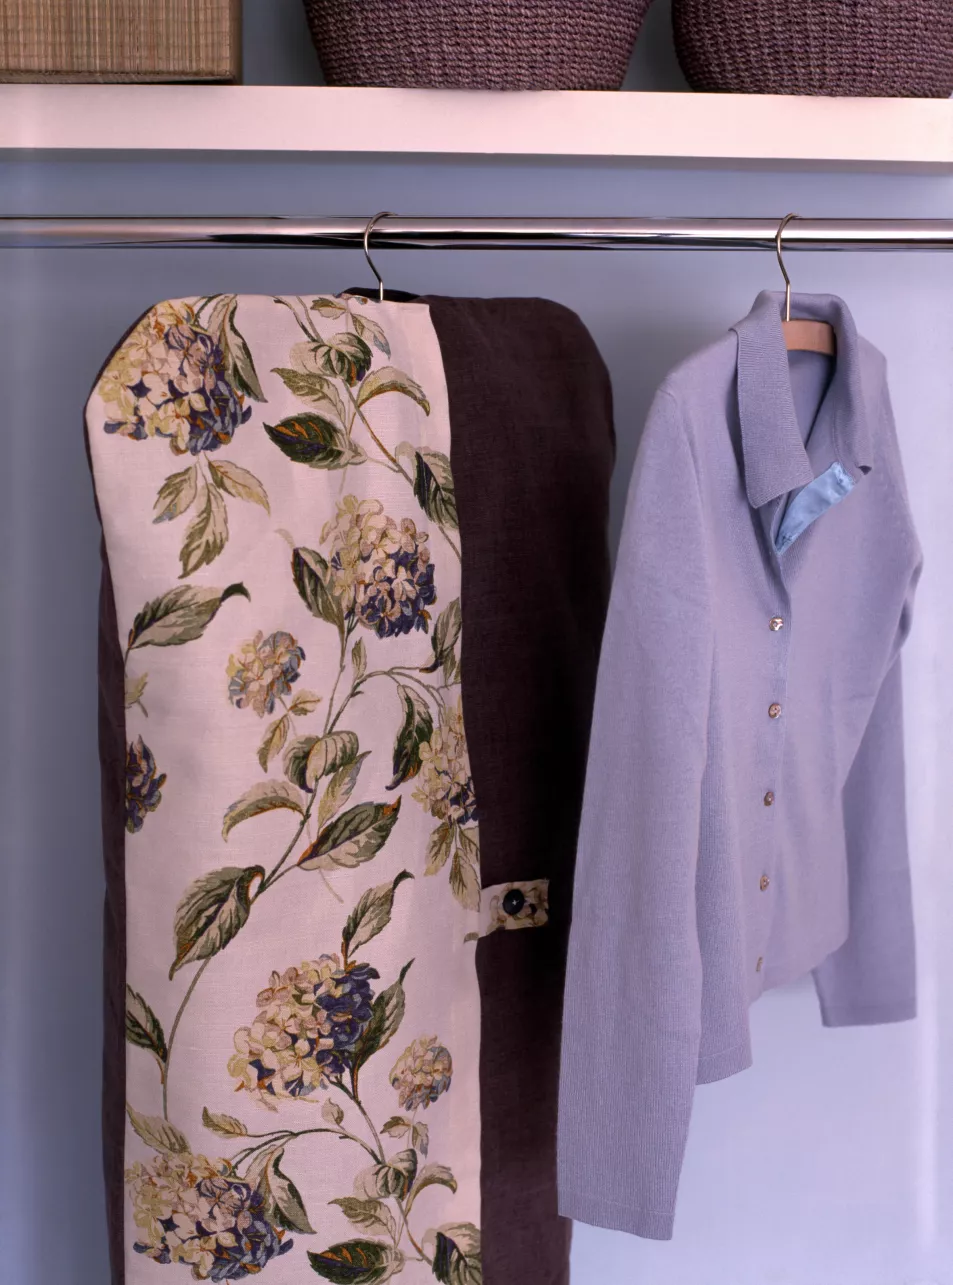 Floral clothes protector in wardrobe